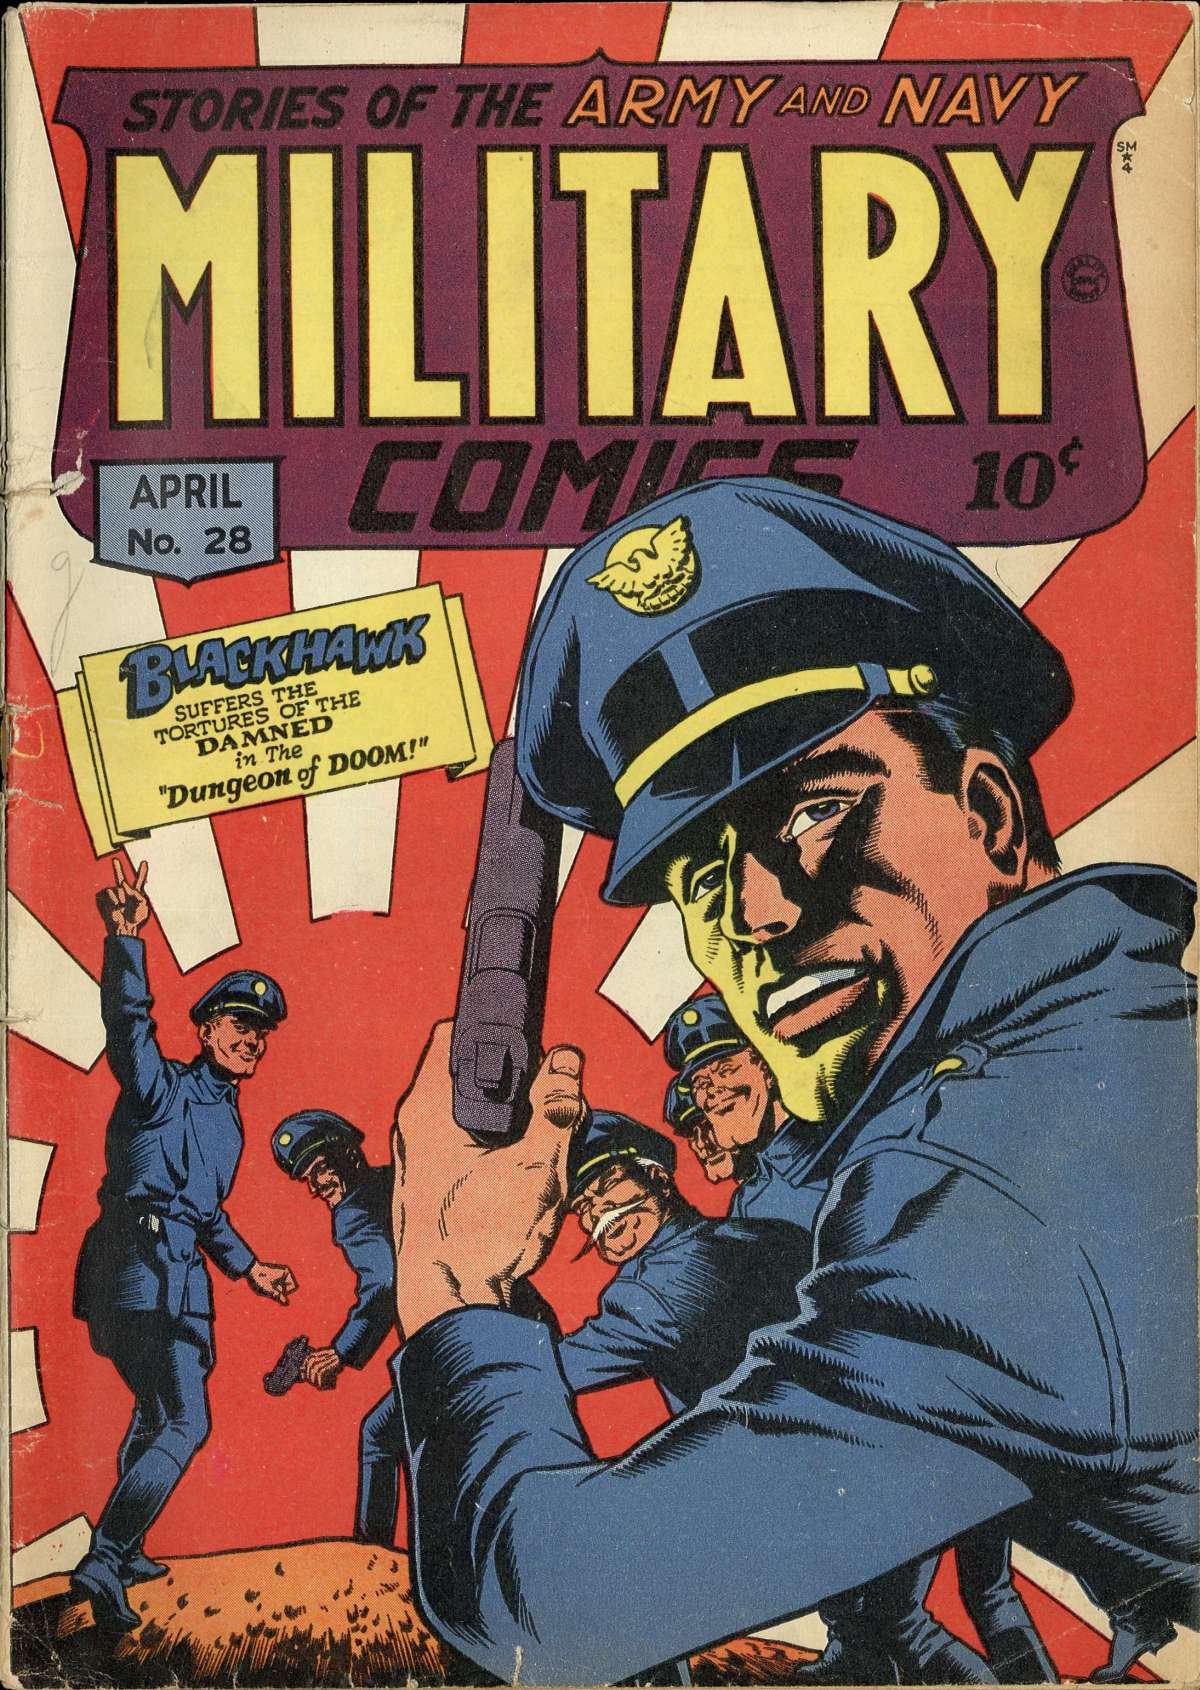 Military Comics #1